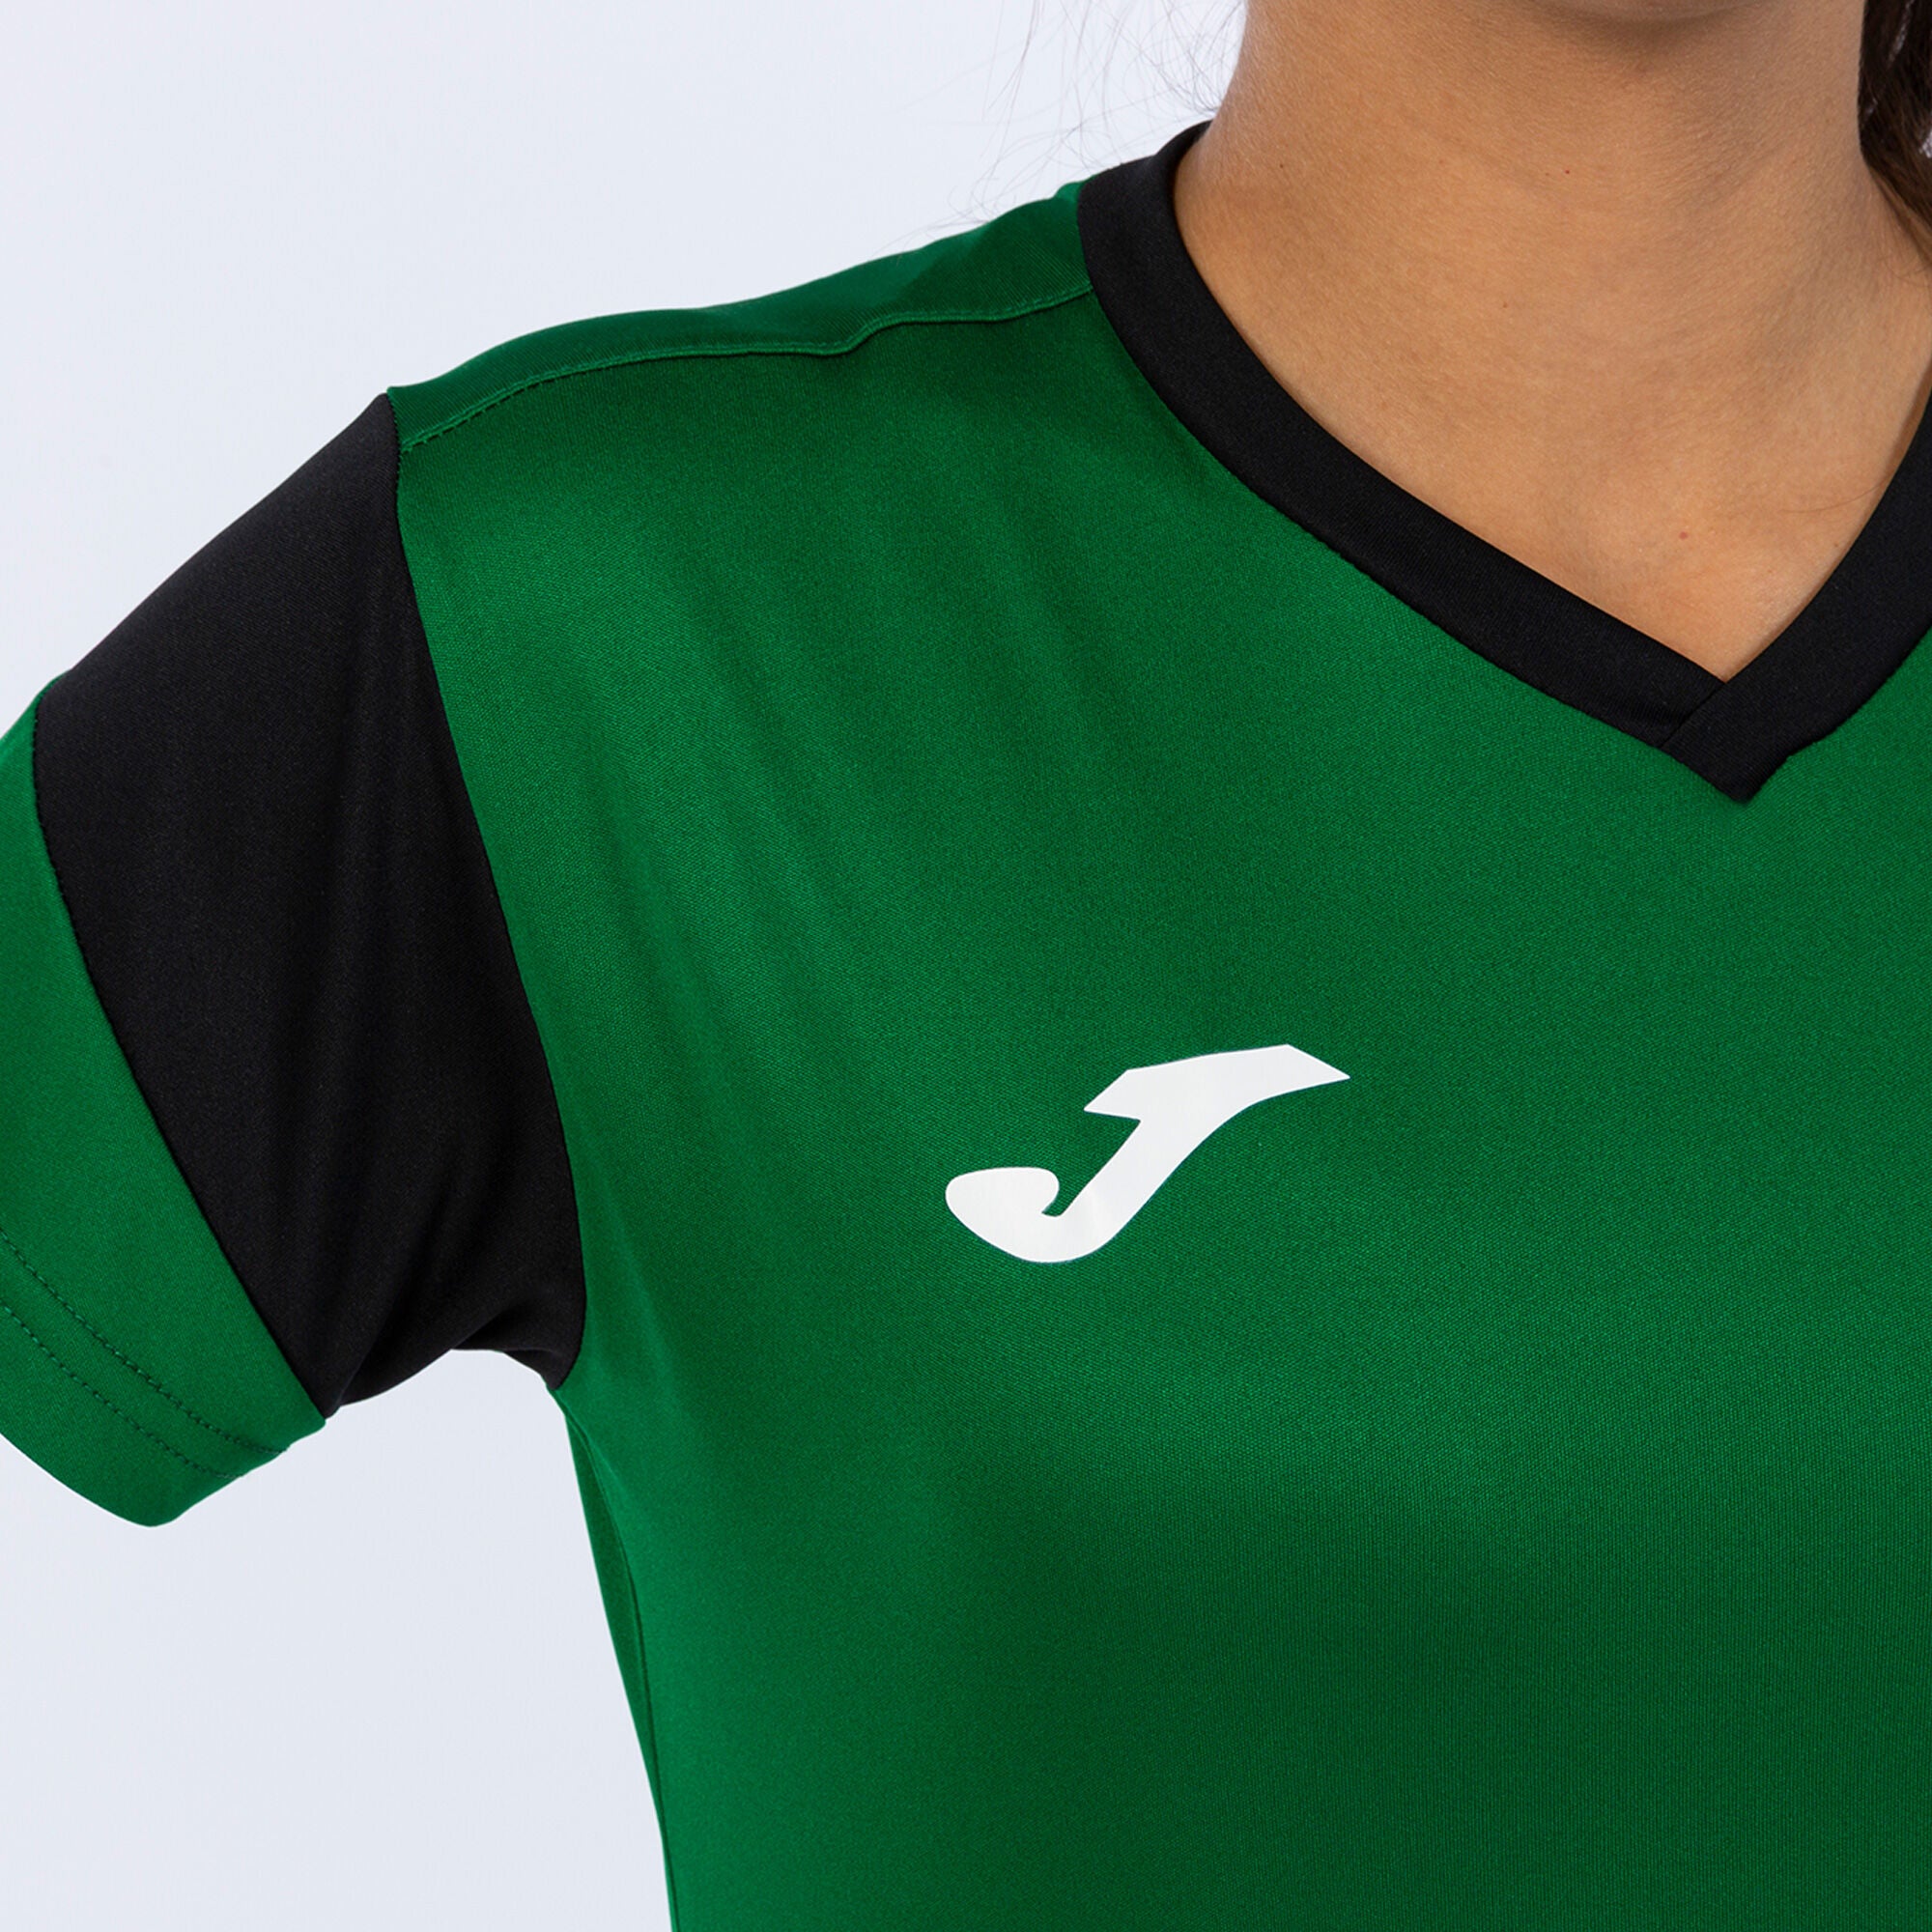 Joma Phoenix Activewear T-shirt & Short Set Ladies-2372-Green Black